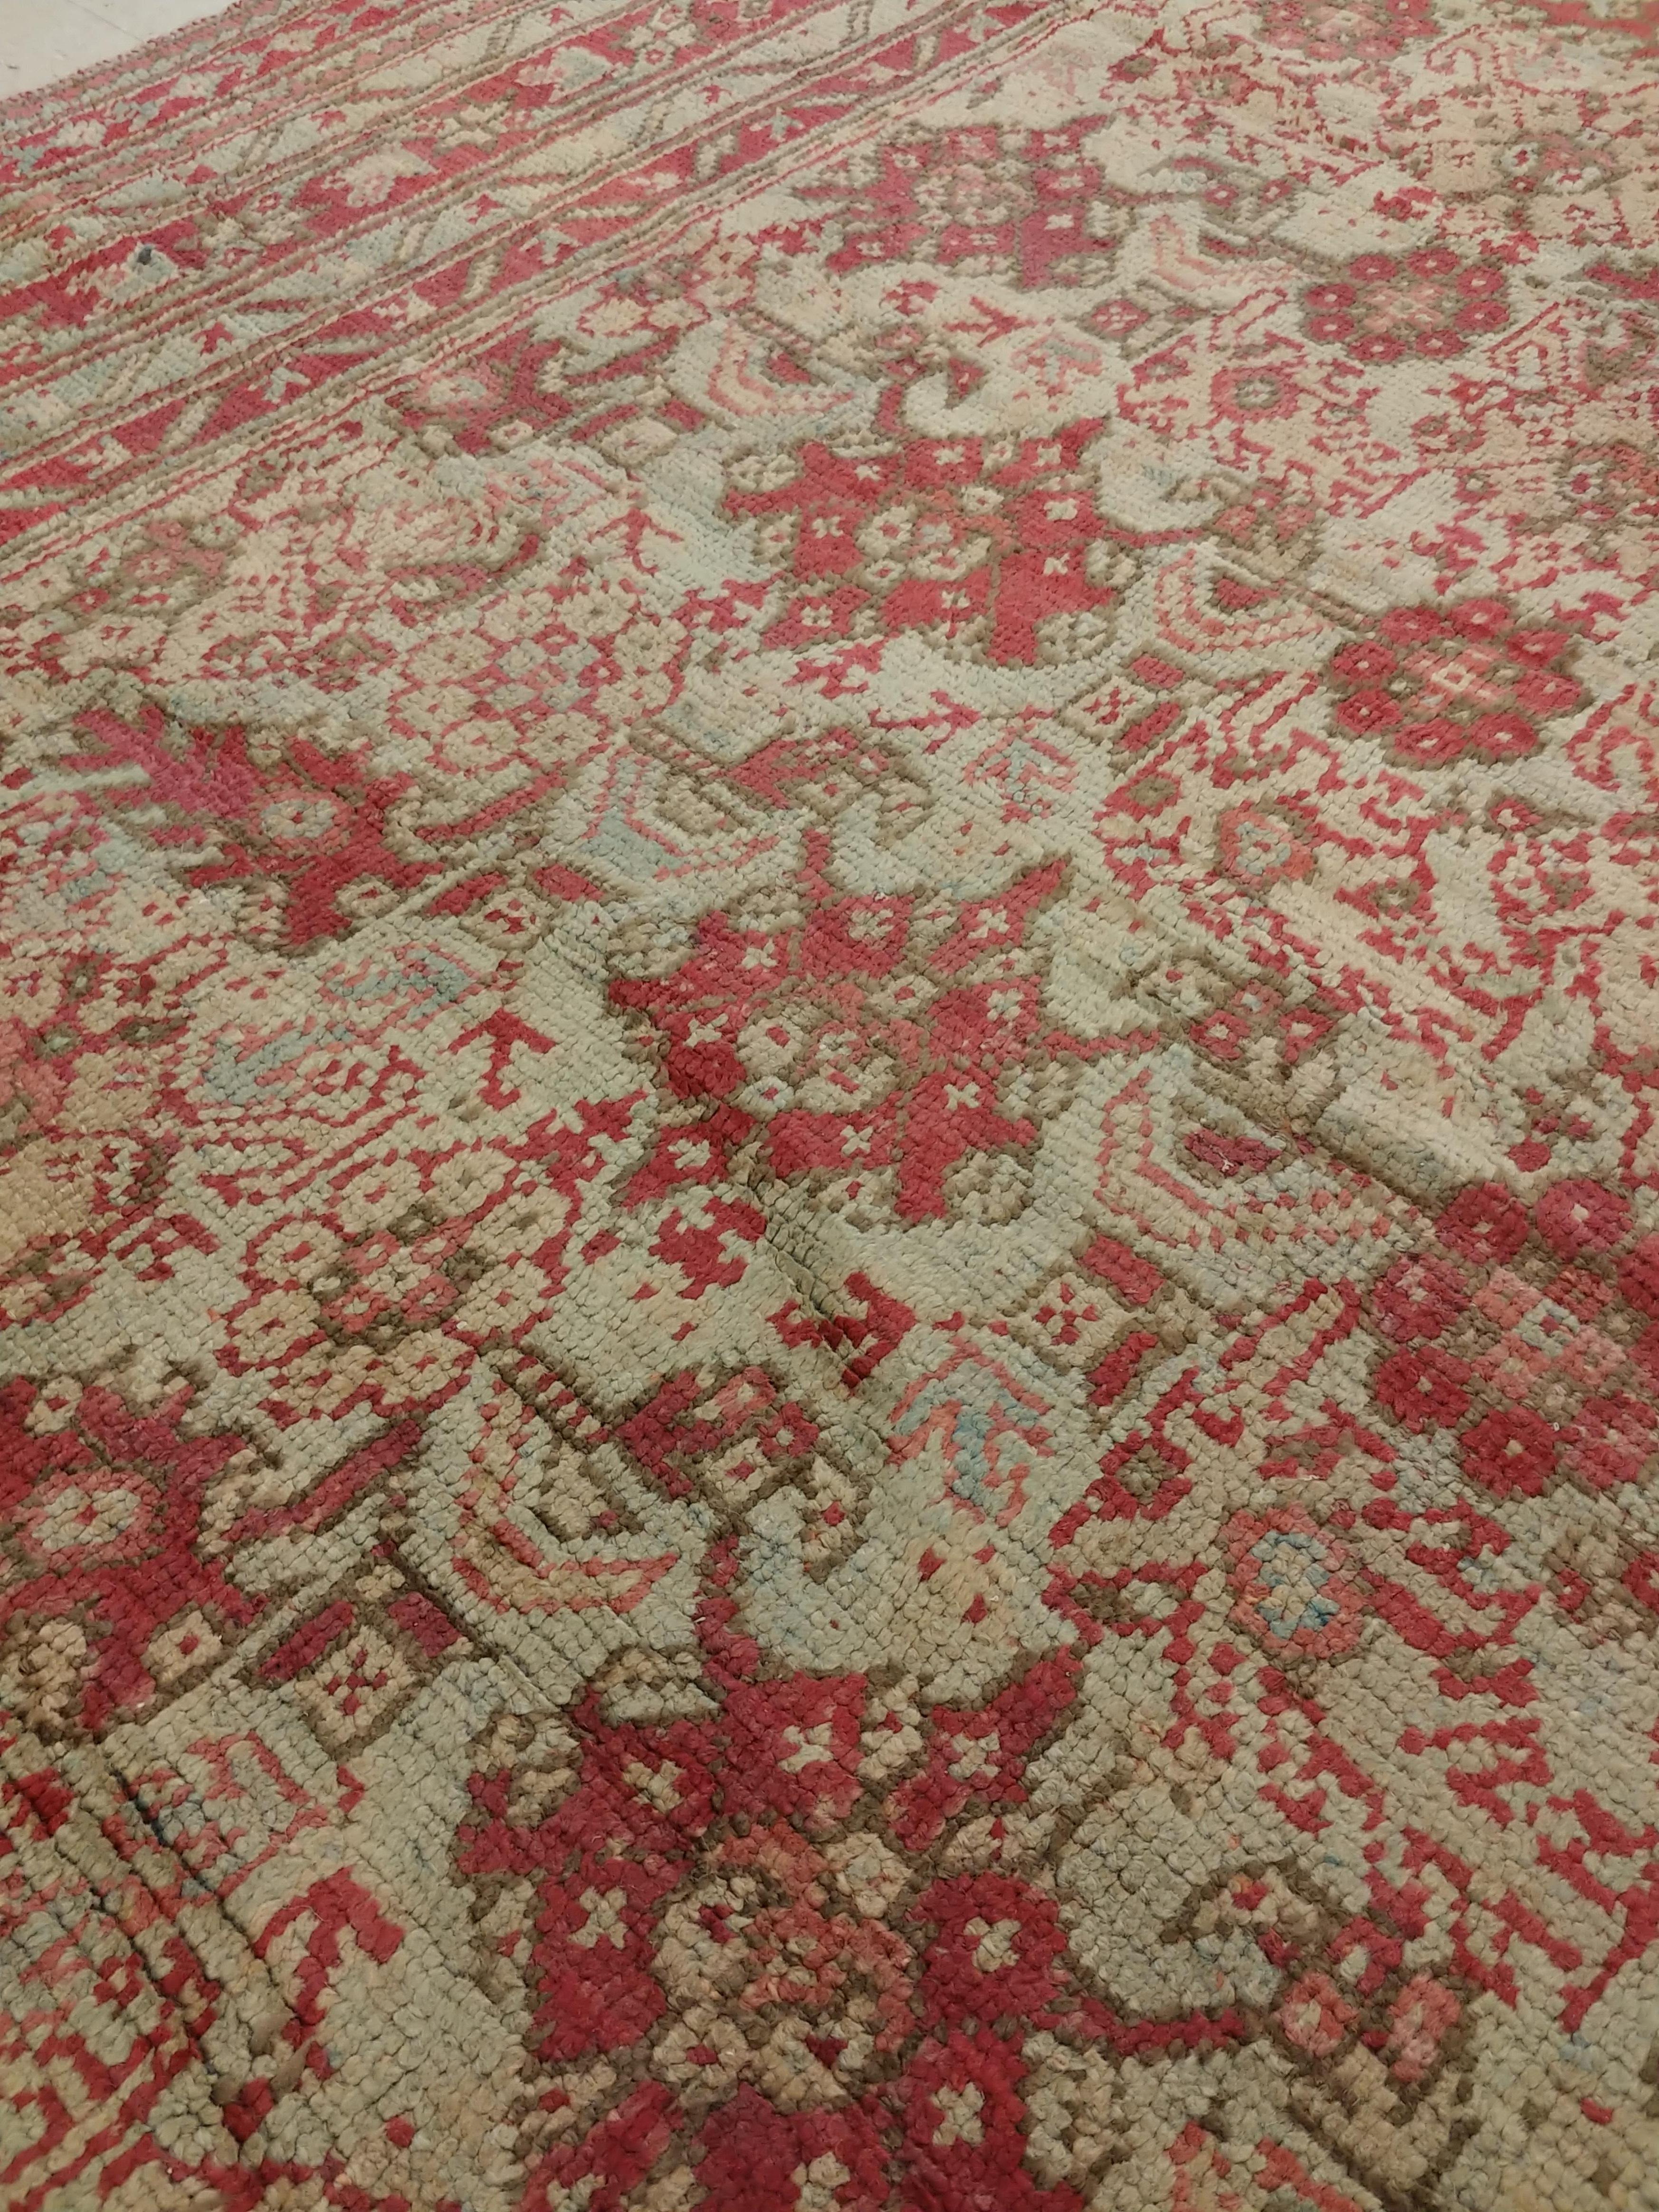 Antique Oushak Carpet, Handmade Oriental Rug, Pale Light Blue, Coral, Raspberry For Sale 3